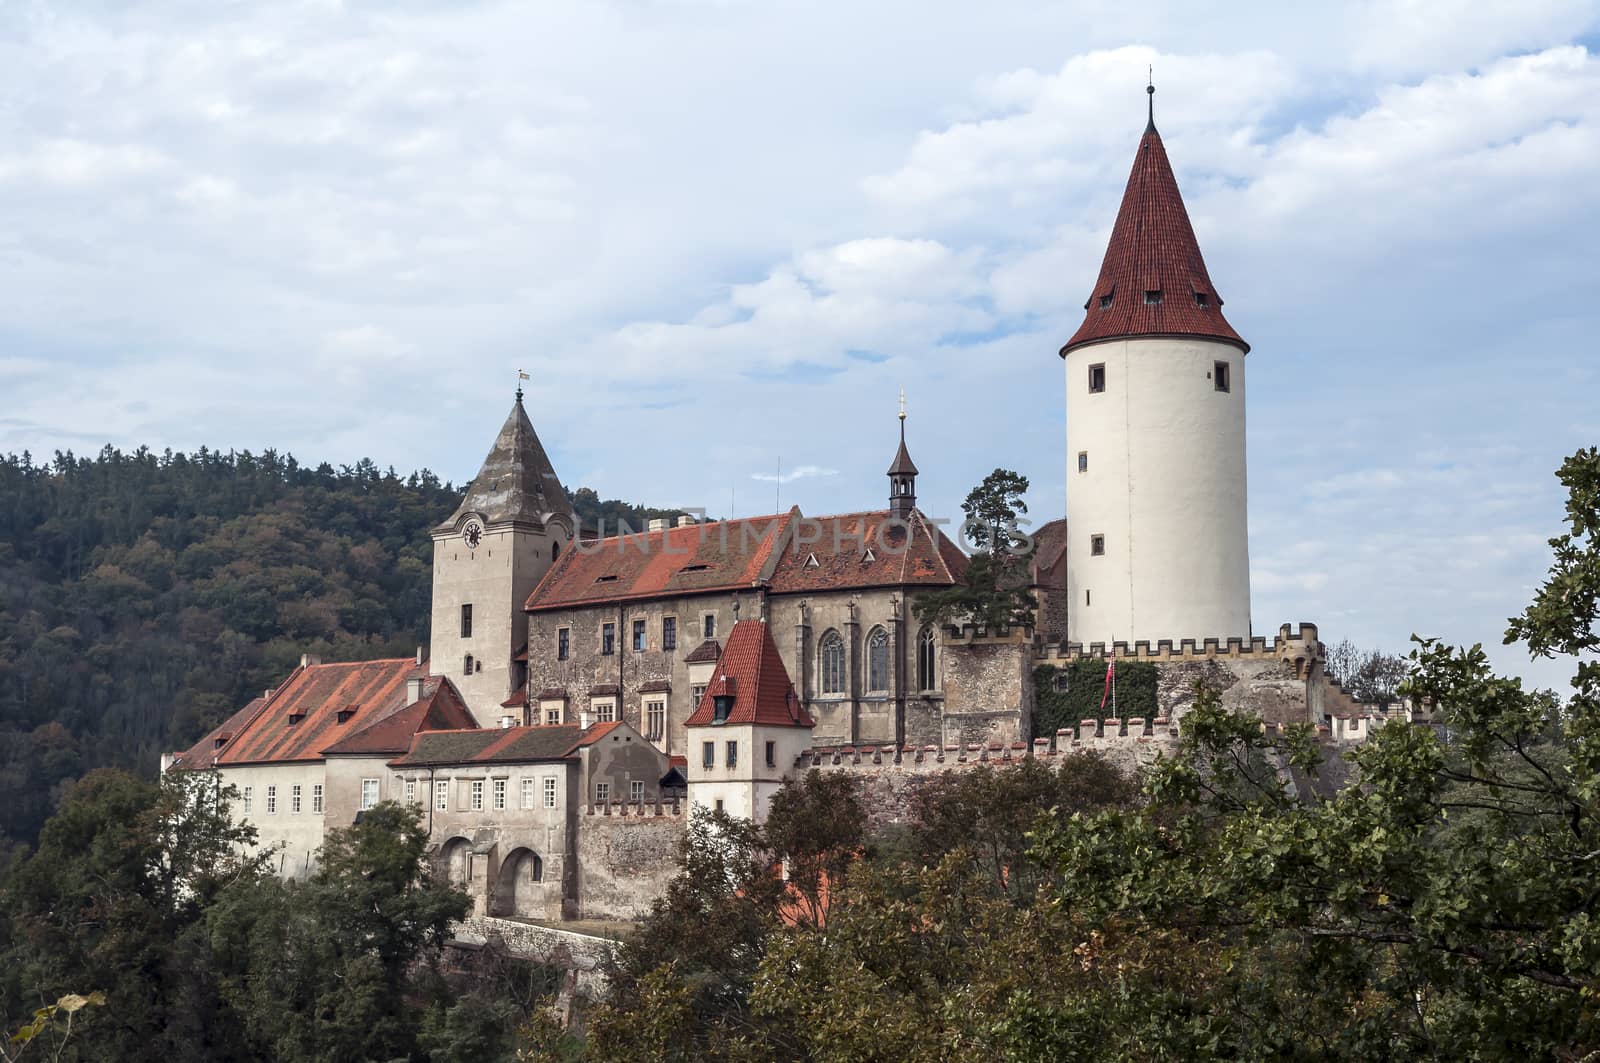 Medieval Krivolat Castle in Central Bohemia, Czech Republic.